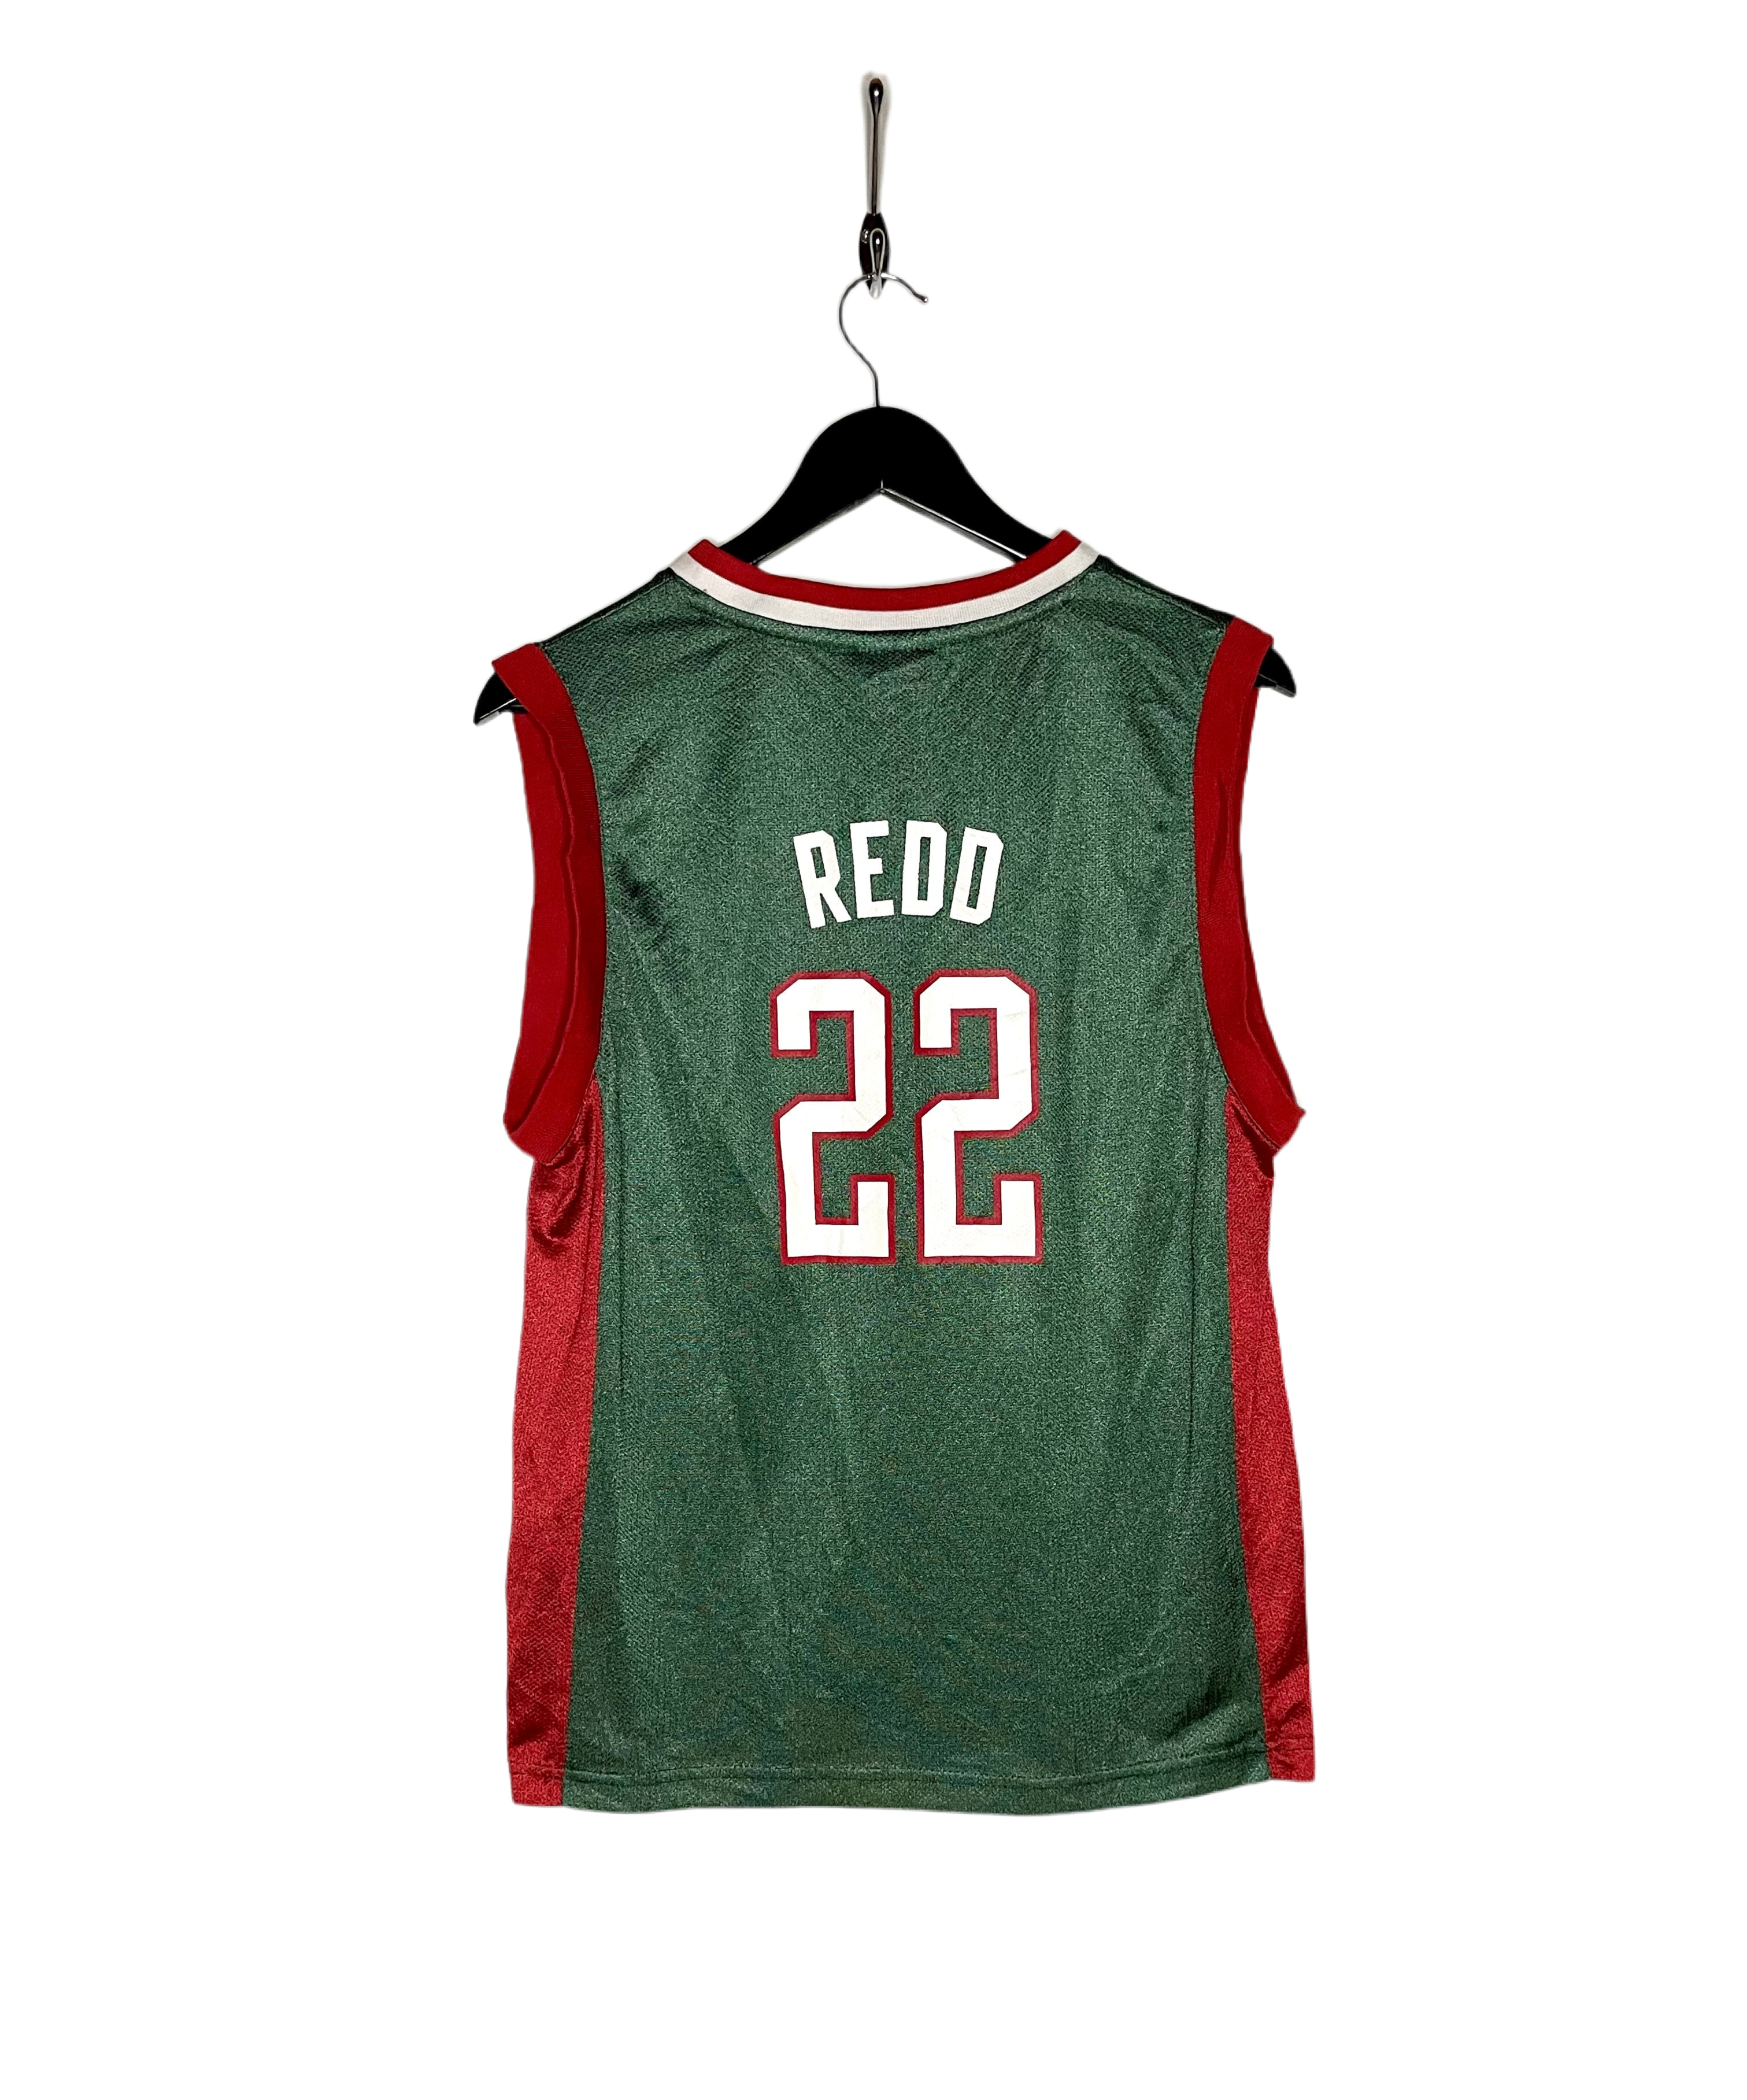 Adidas Jersey Milwaukee Bucks Michael Redd #22 Green Size L 